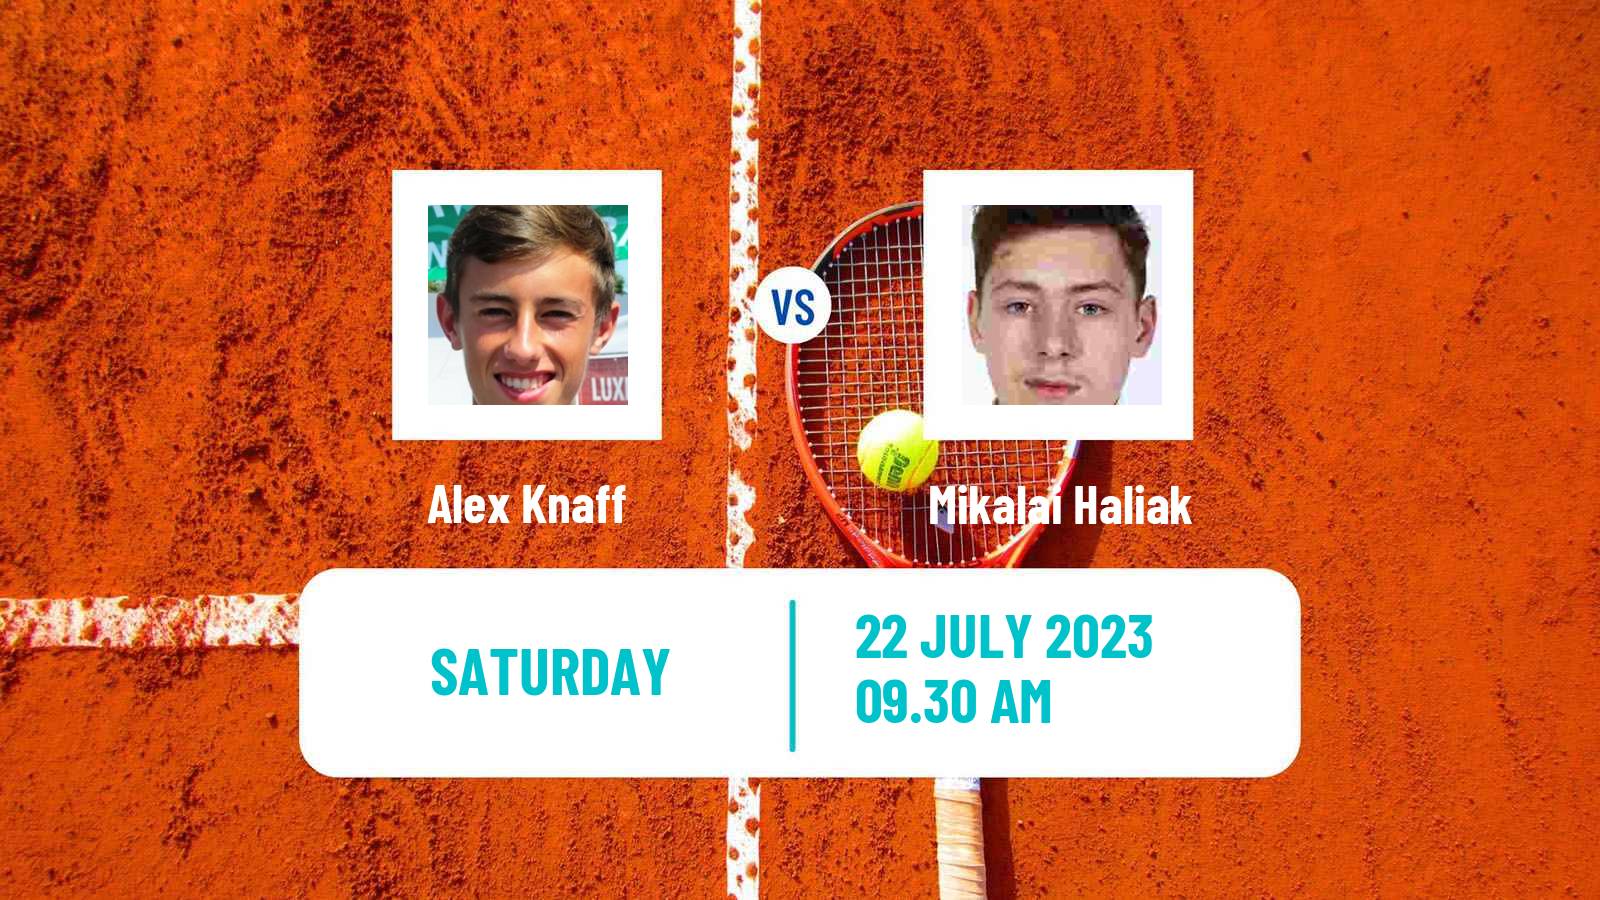 Tennis ITF M25 Esch Alzette 2 Men Alex Knaff - Mikalai Haliak